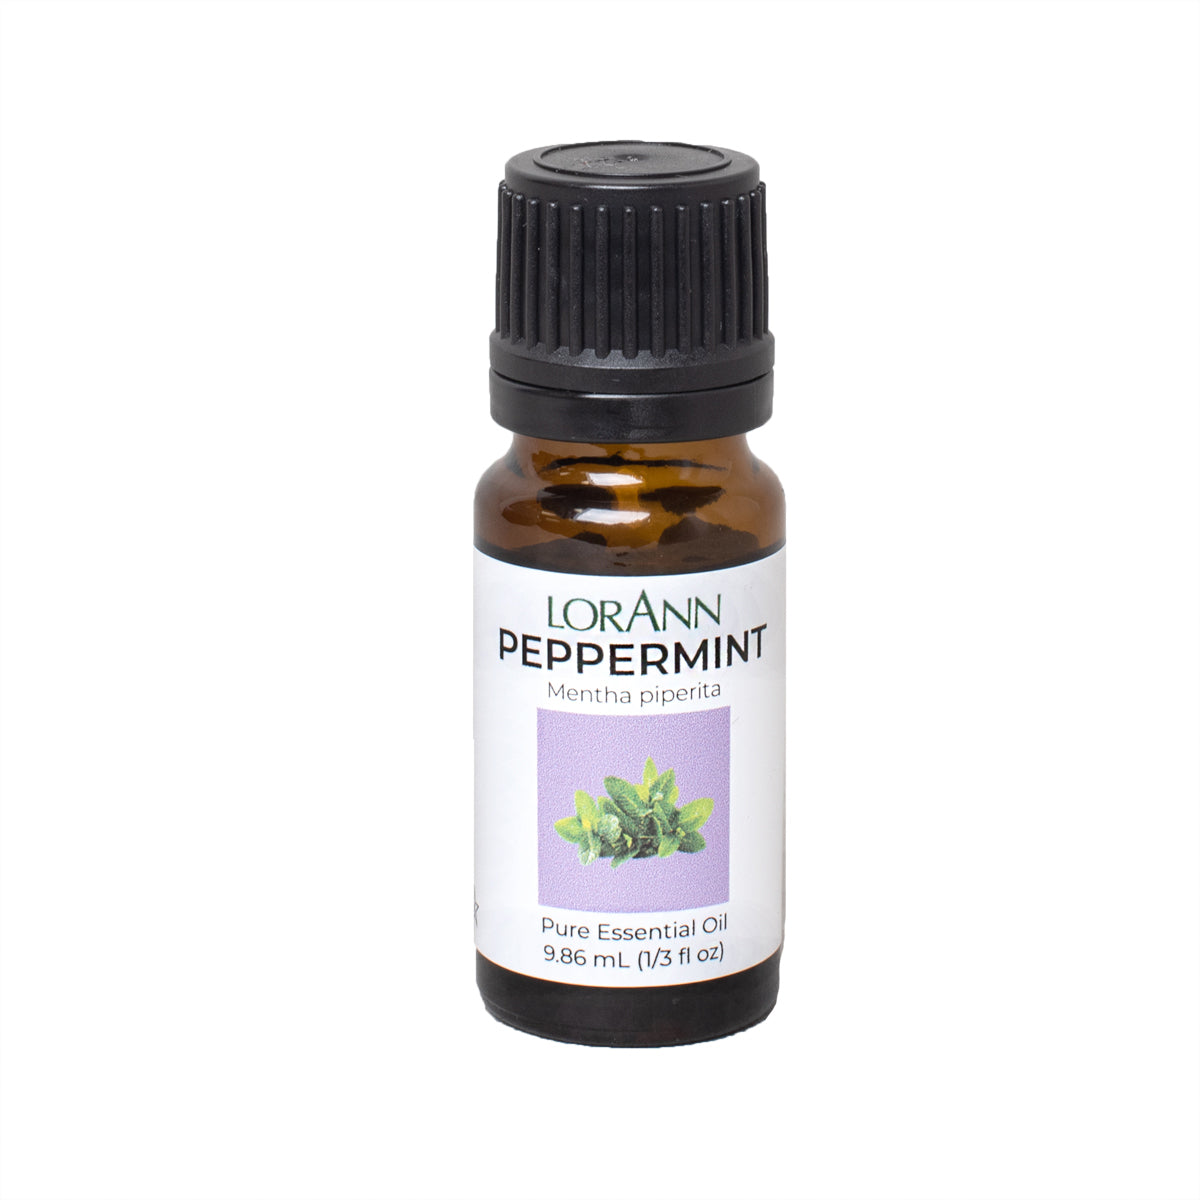 Peppermint Pure Essential Oil (Menta piperita) 1/3 fl oz